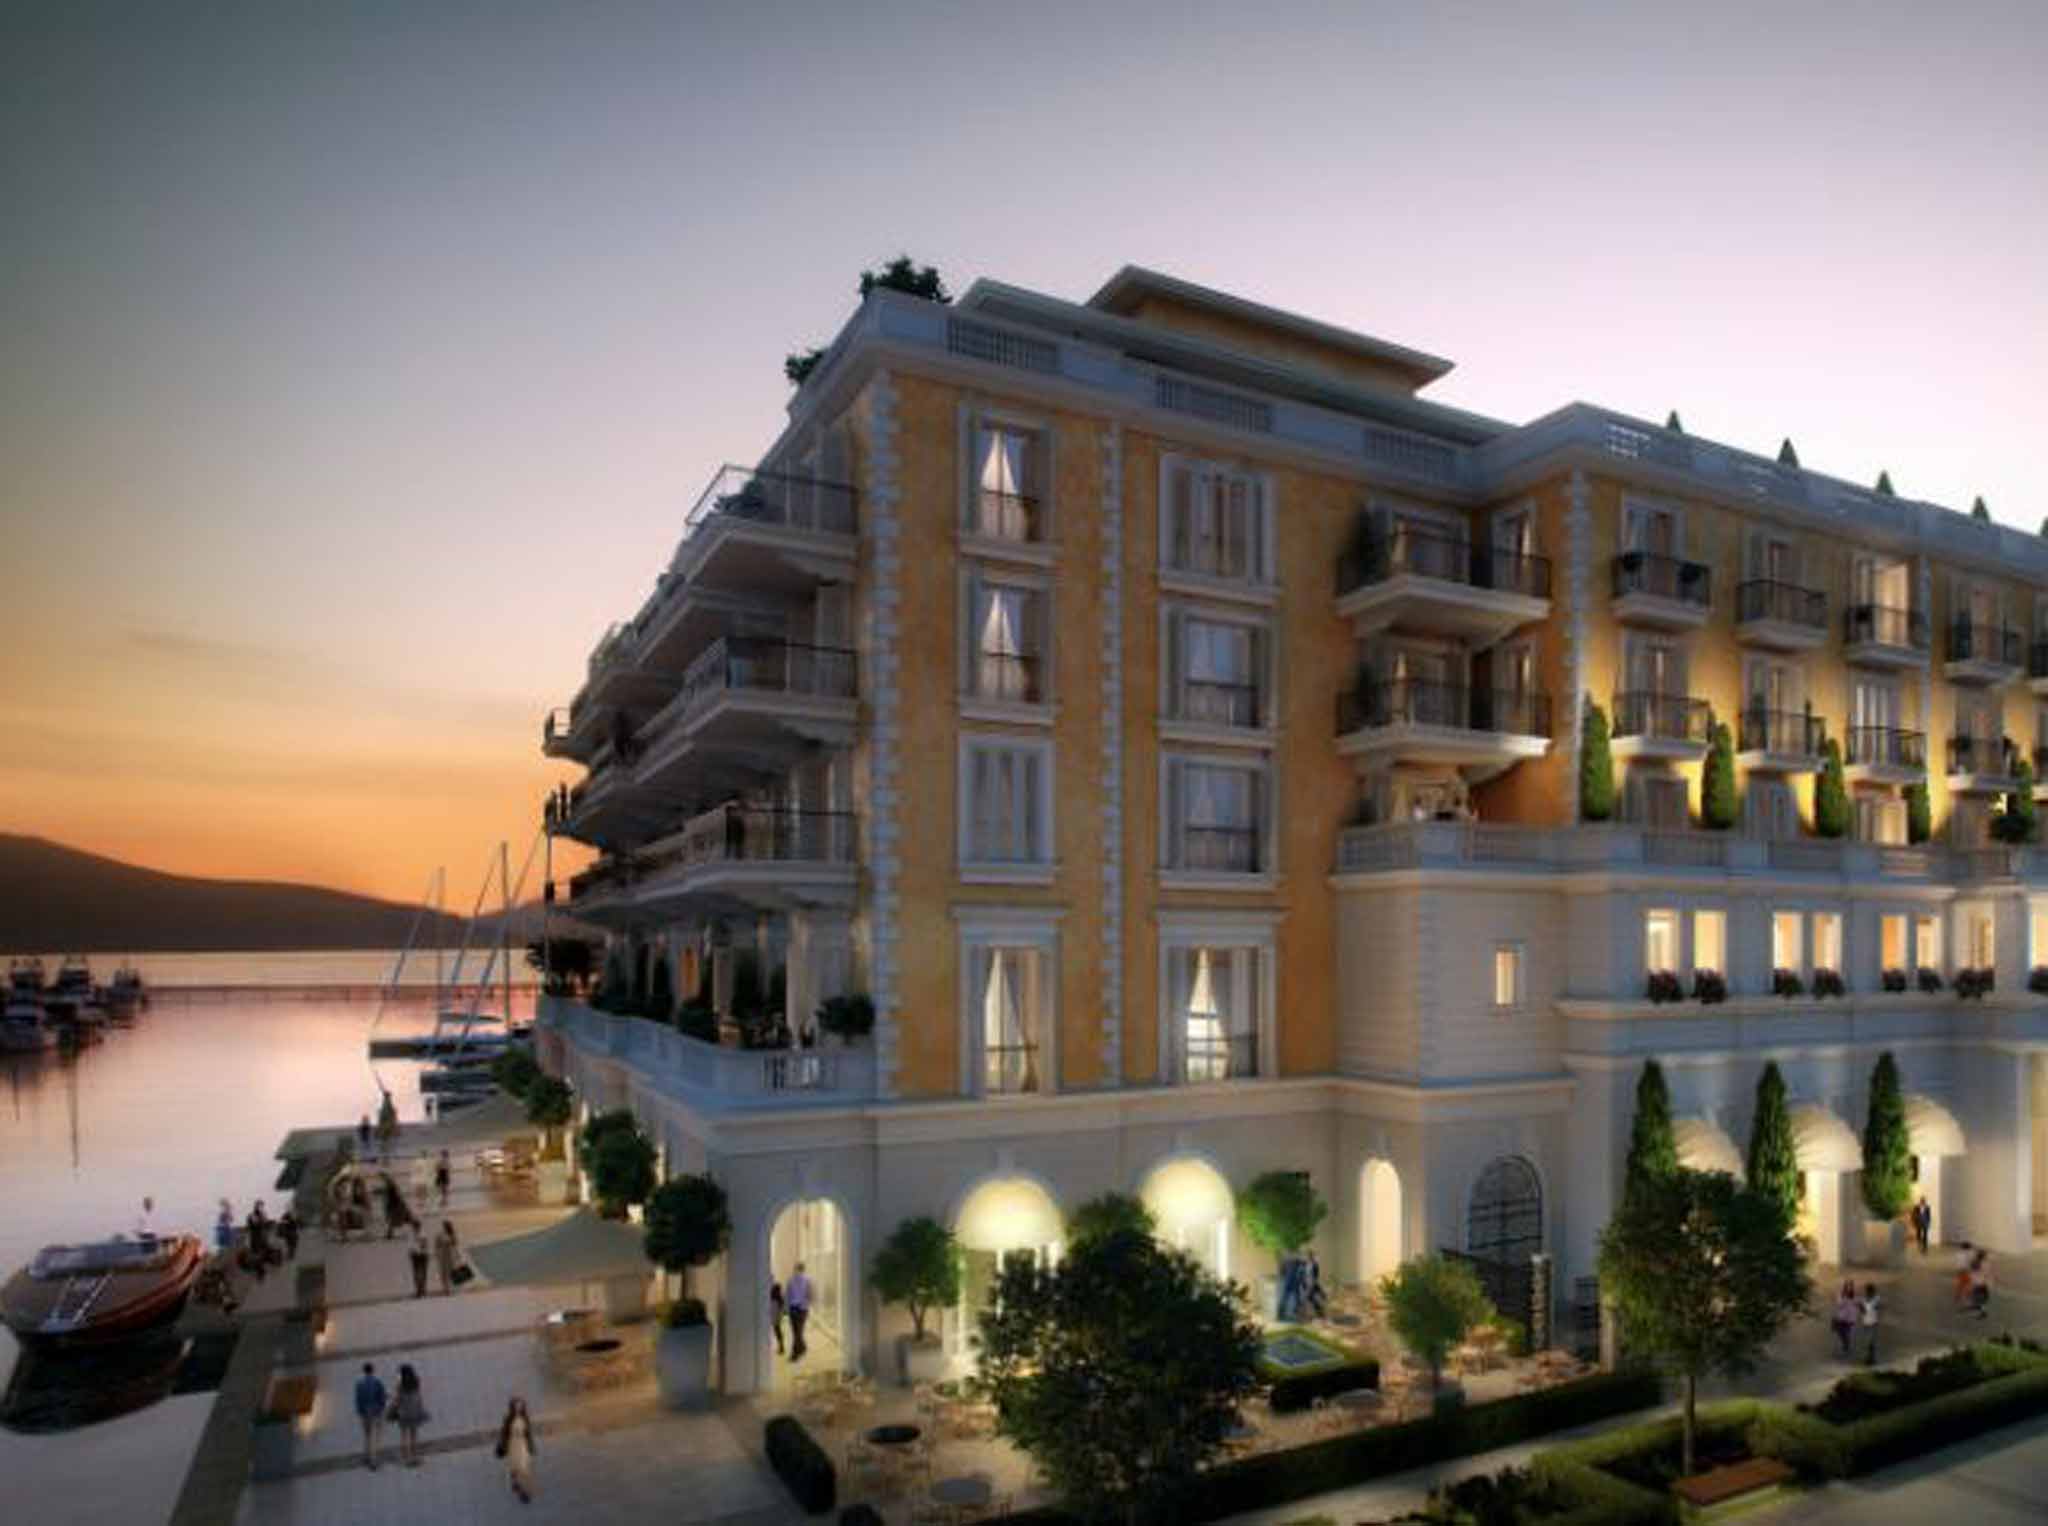 How the Regent hotel will look